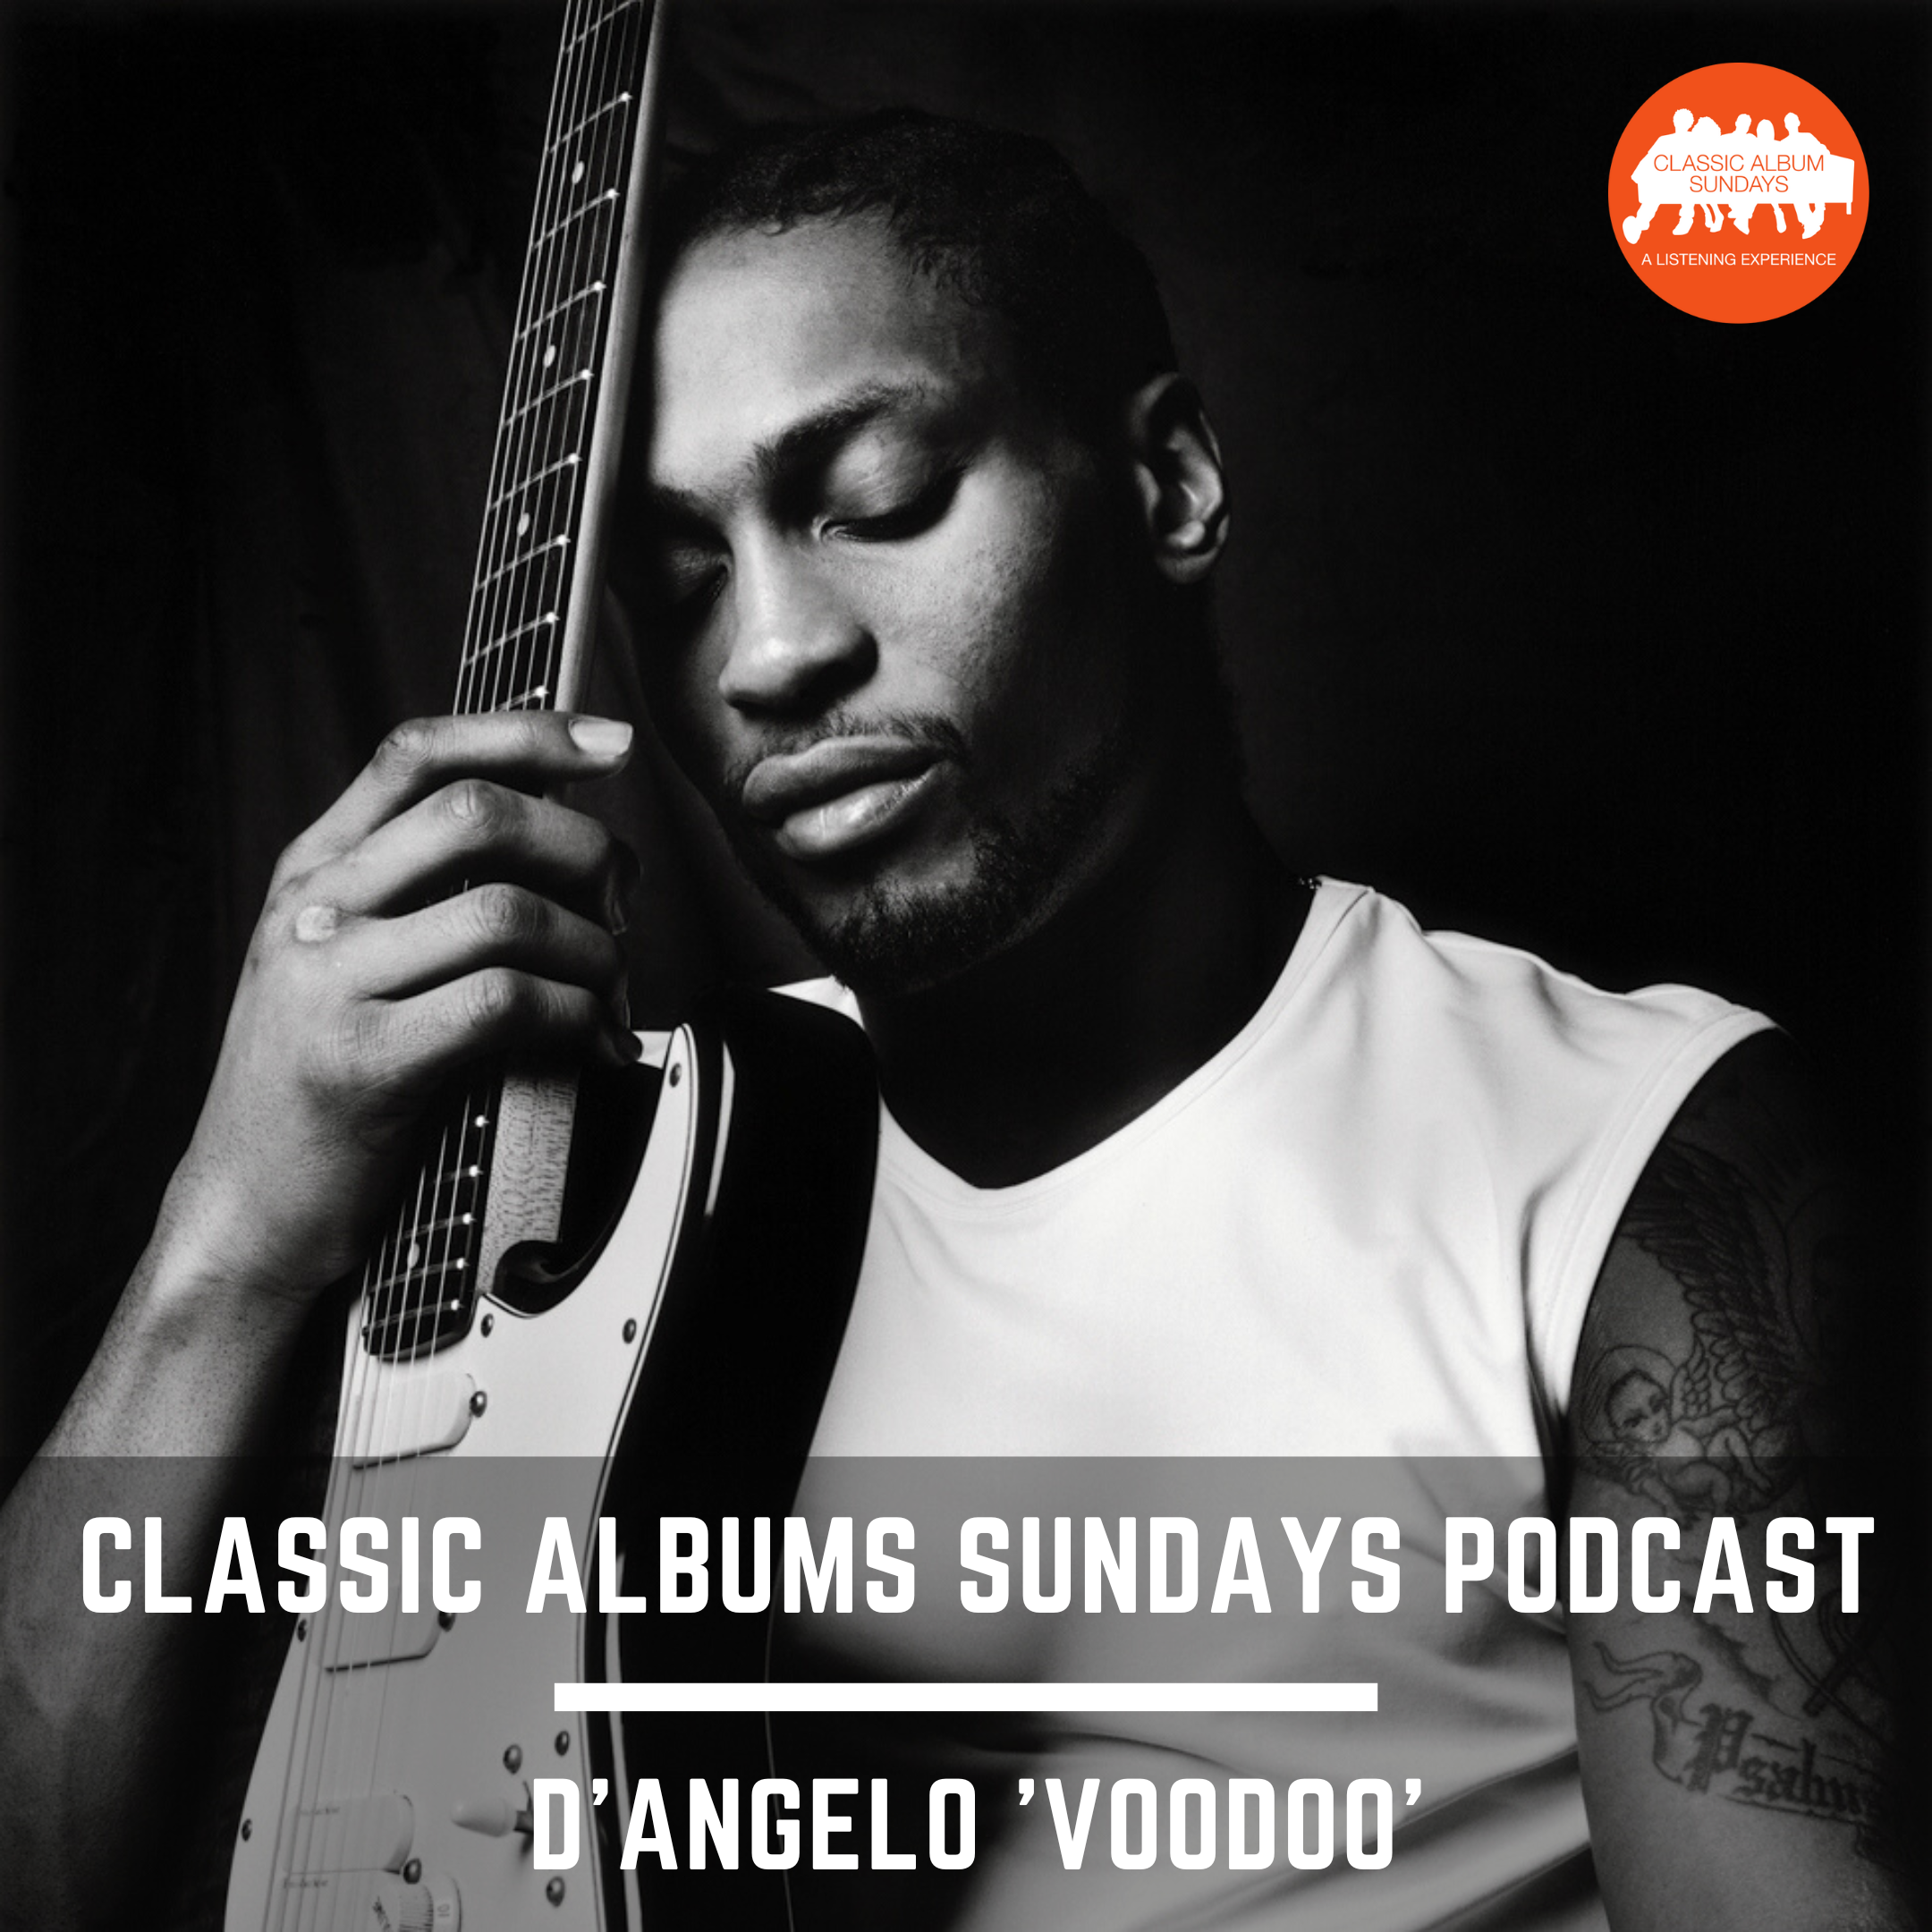 Classic Album Sundays Podcast: D'Angelo 'Voodoo'